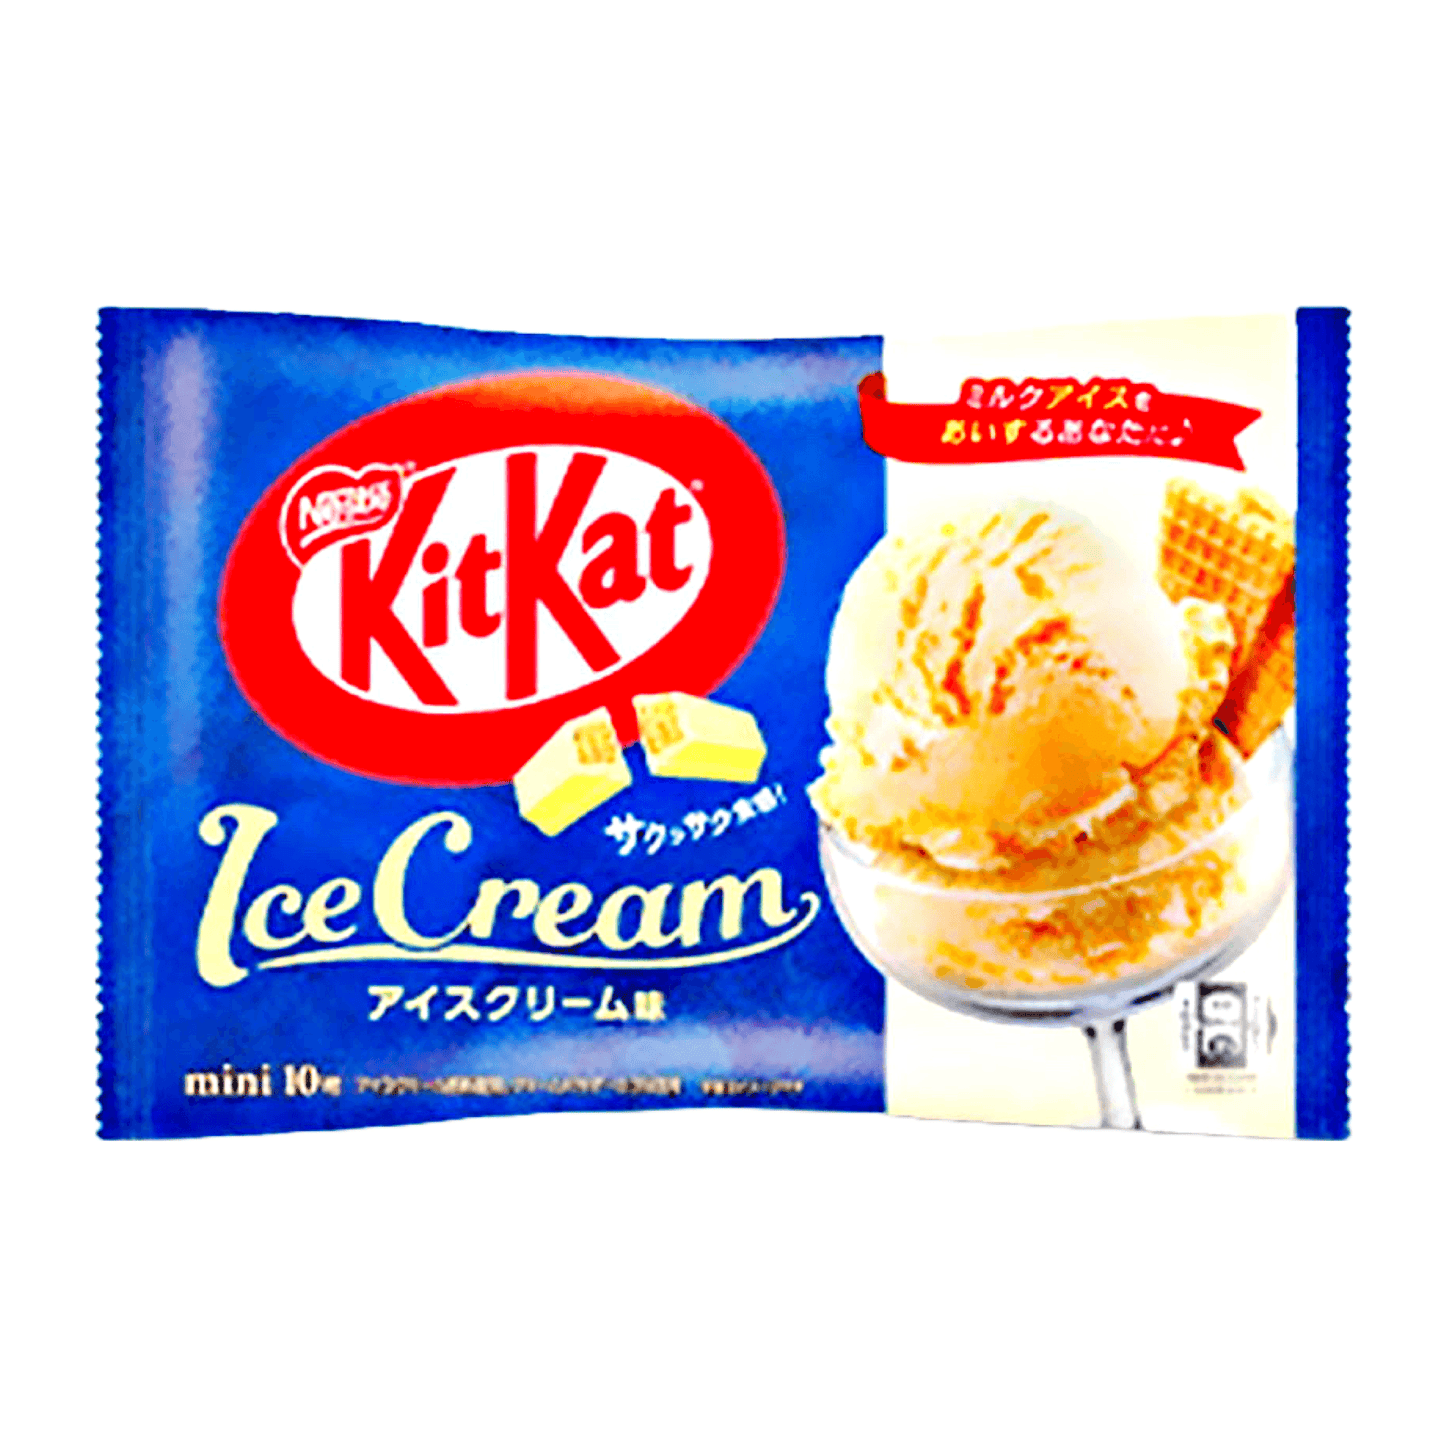 Nestle KitKat Ice Cream 10pcs - The Snacks Box - Asian Snacks Store - The Snacks Box - Korean Snack - Japanese Snack